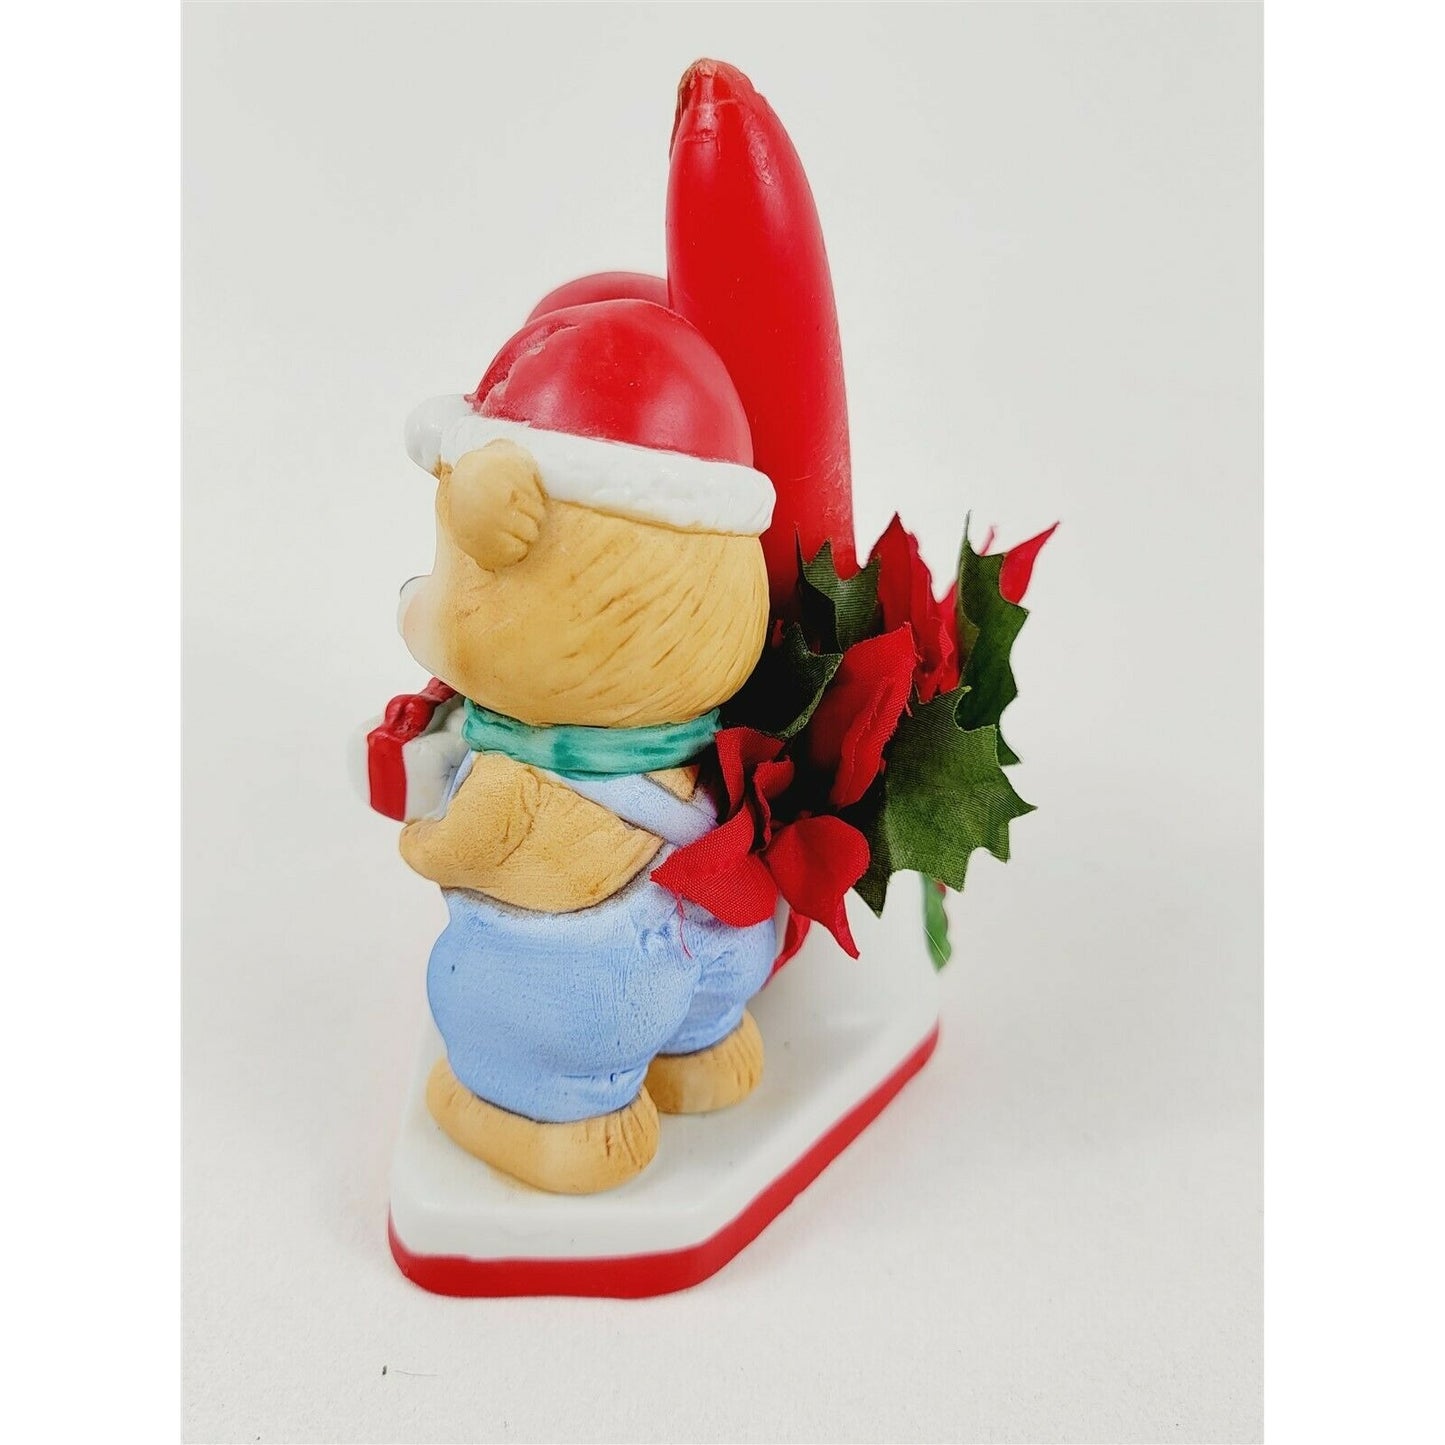 Vintage Beacon Hill Christmas Teddy Bears Present Ceramic Candle Holder